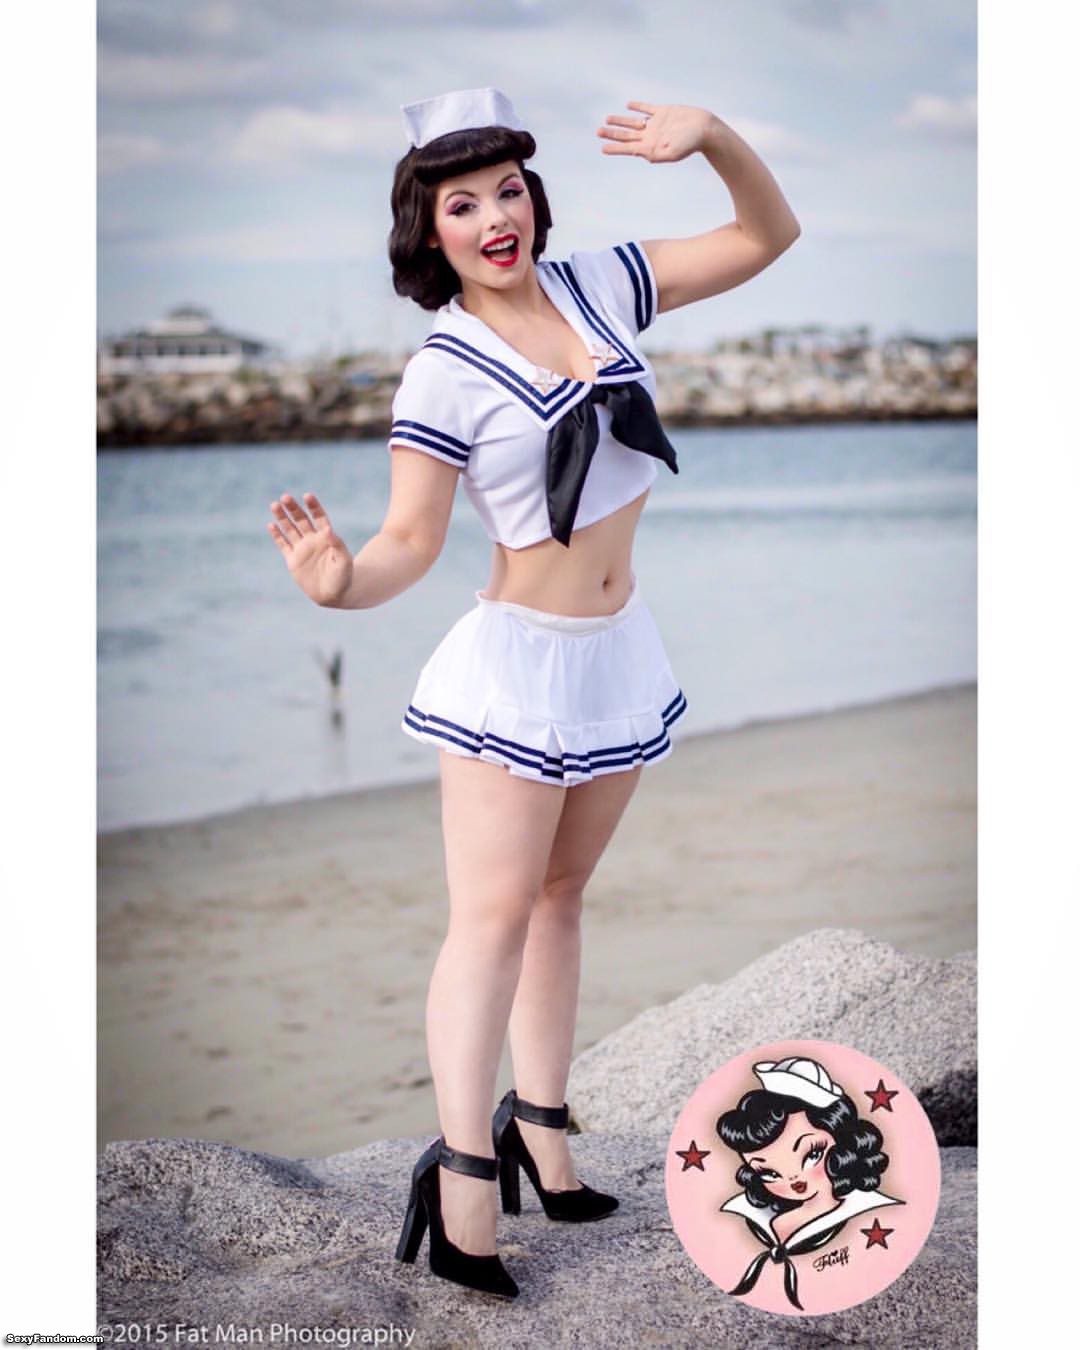 Cosplayer posing as Suzy Sailor.